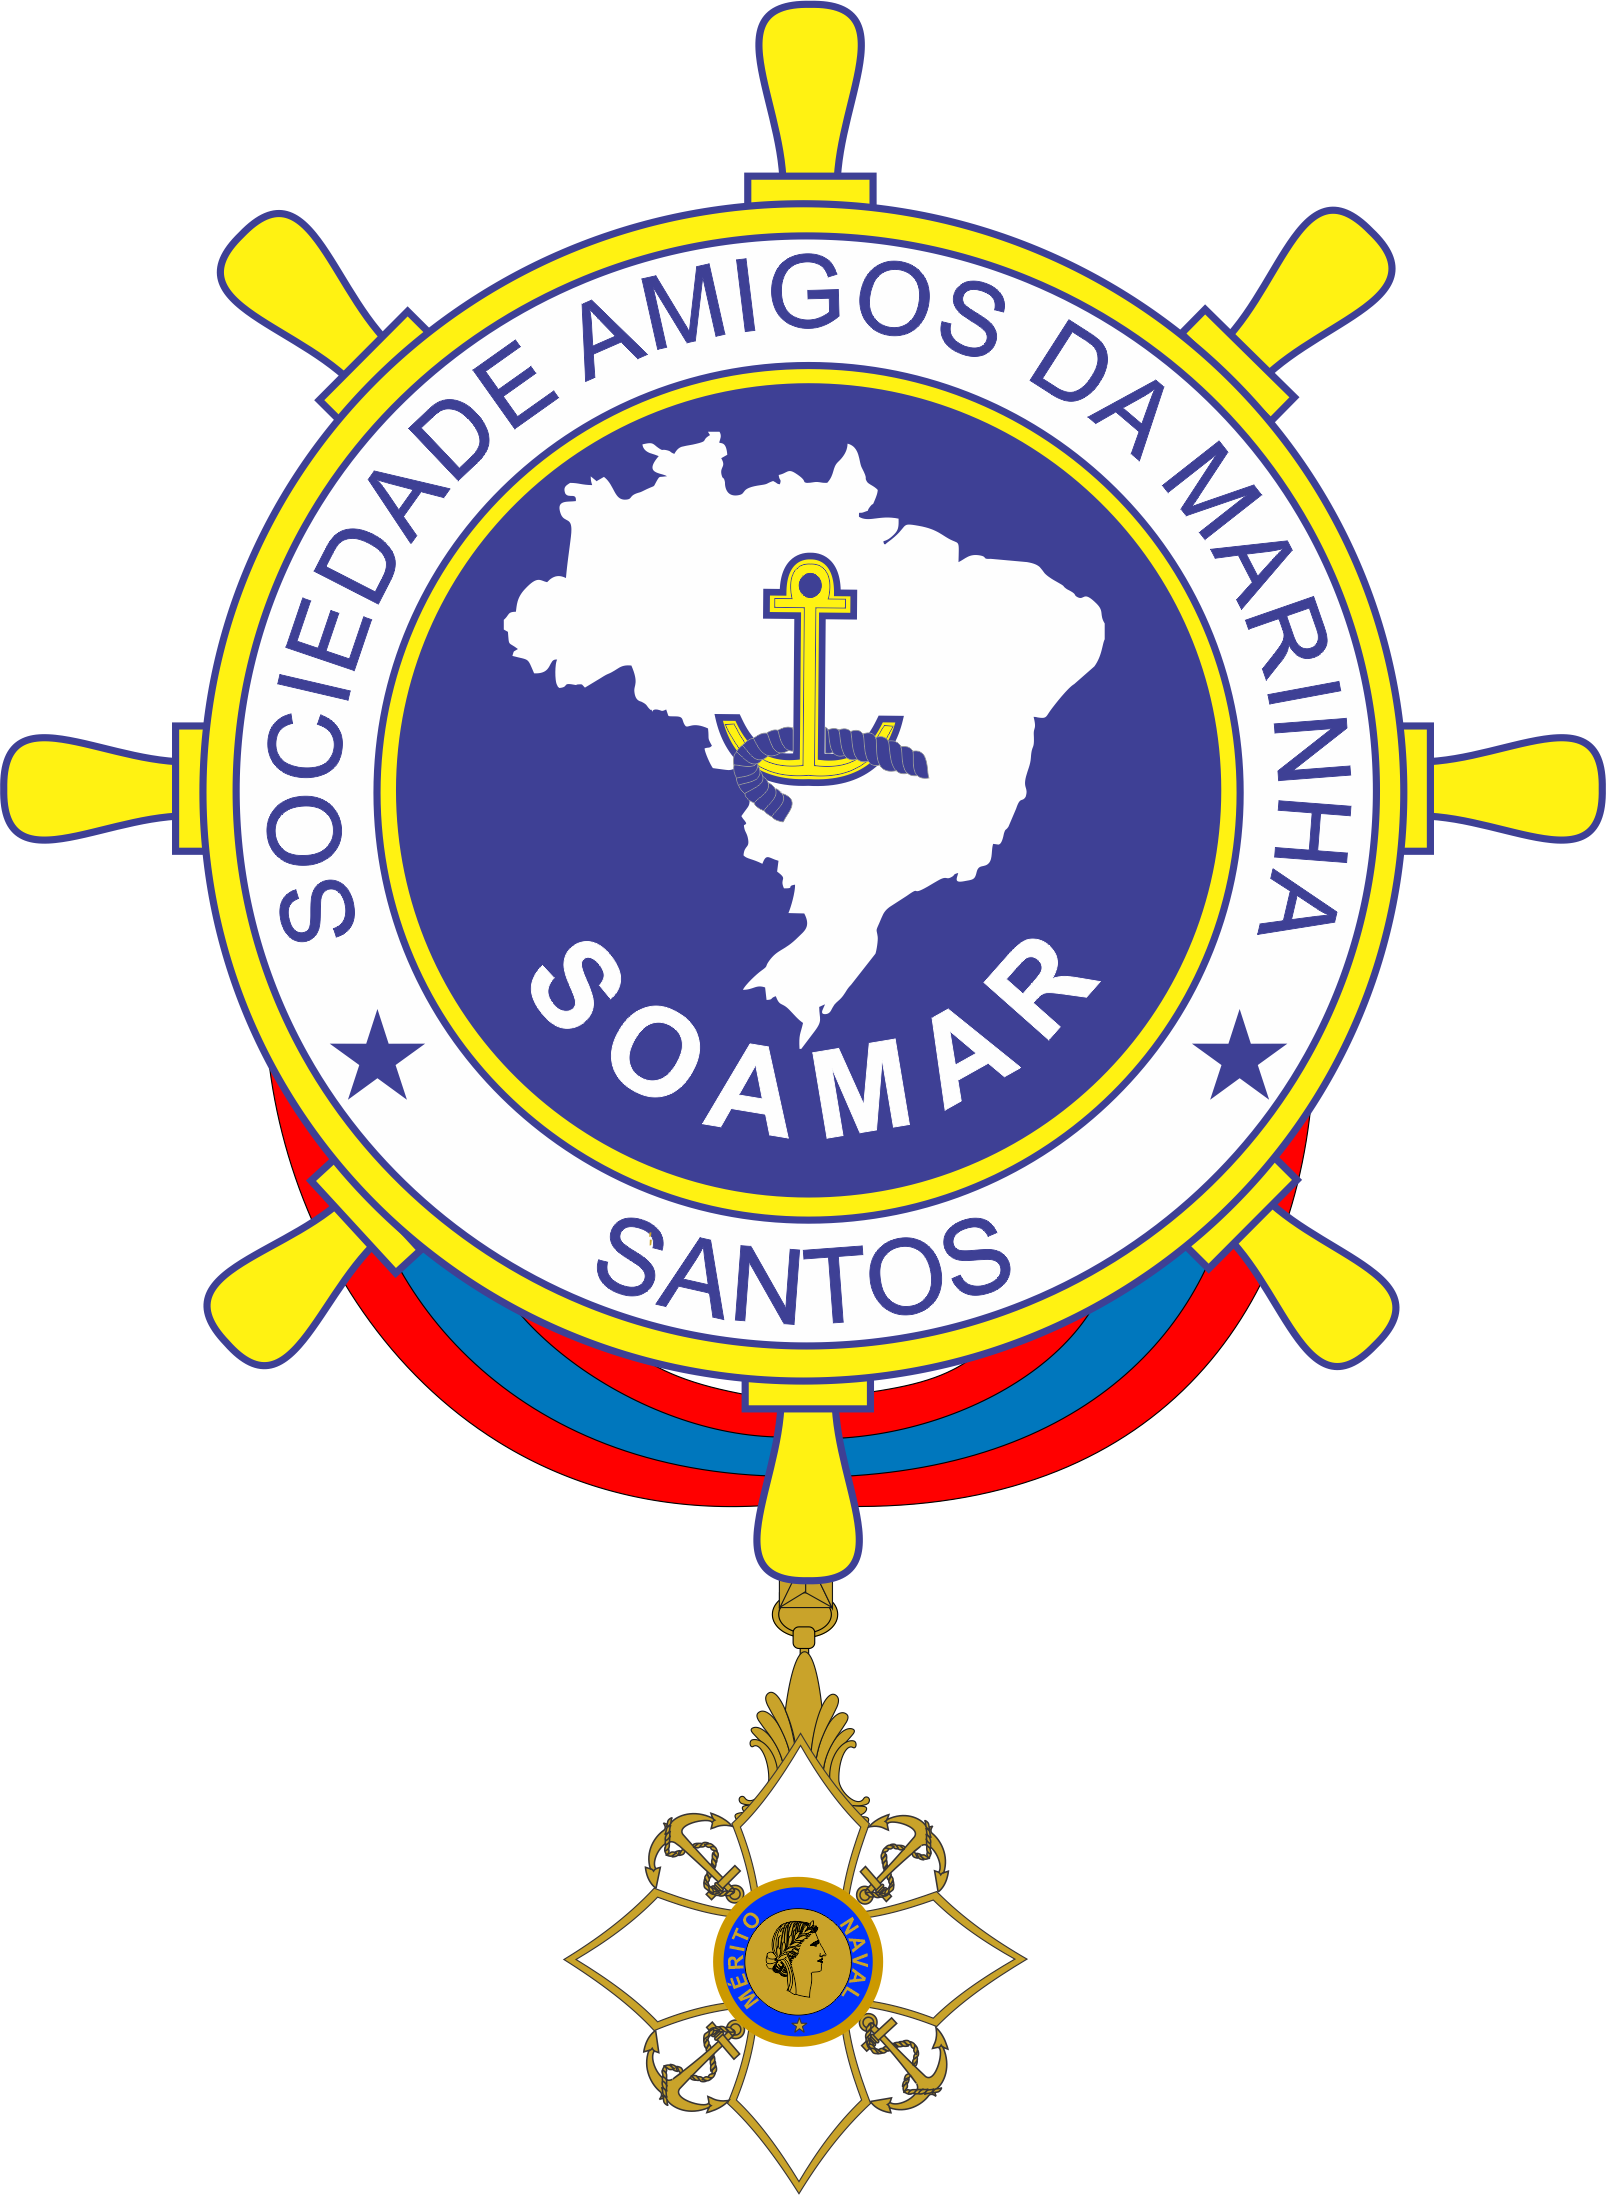 SOAMAR Santos